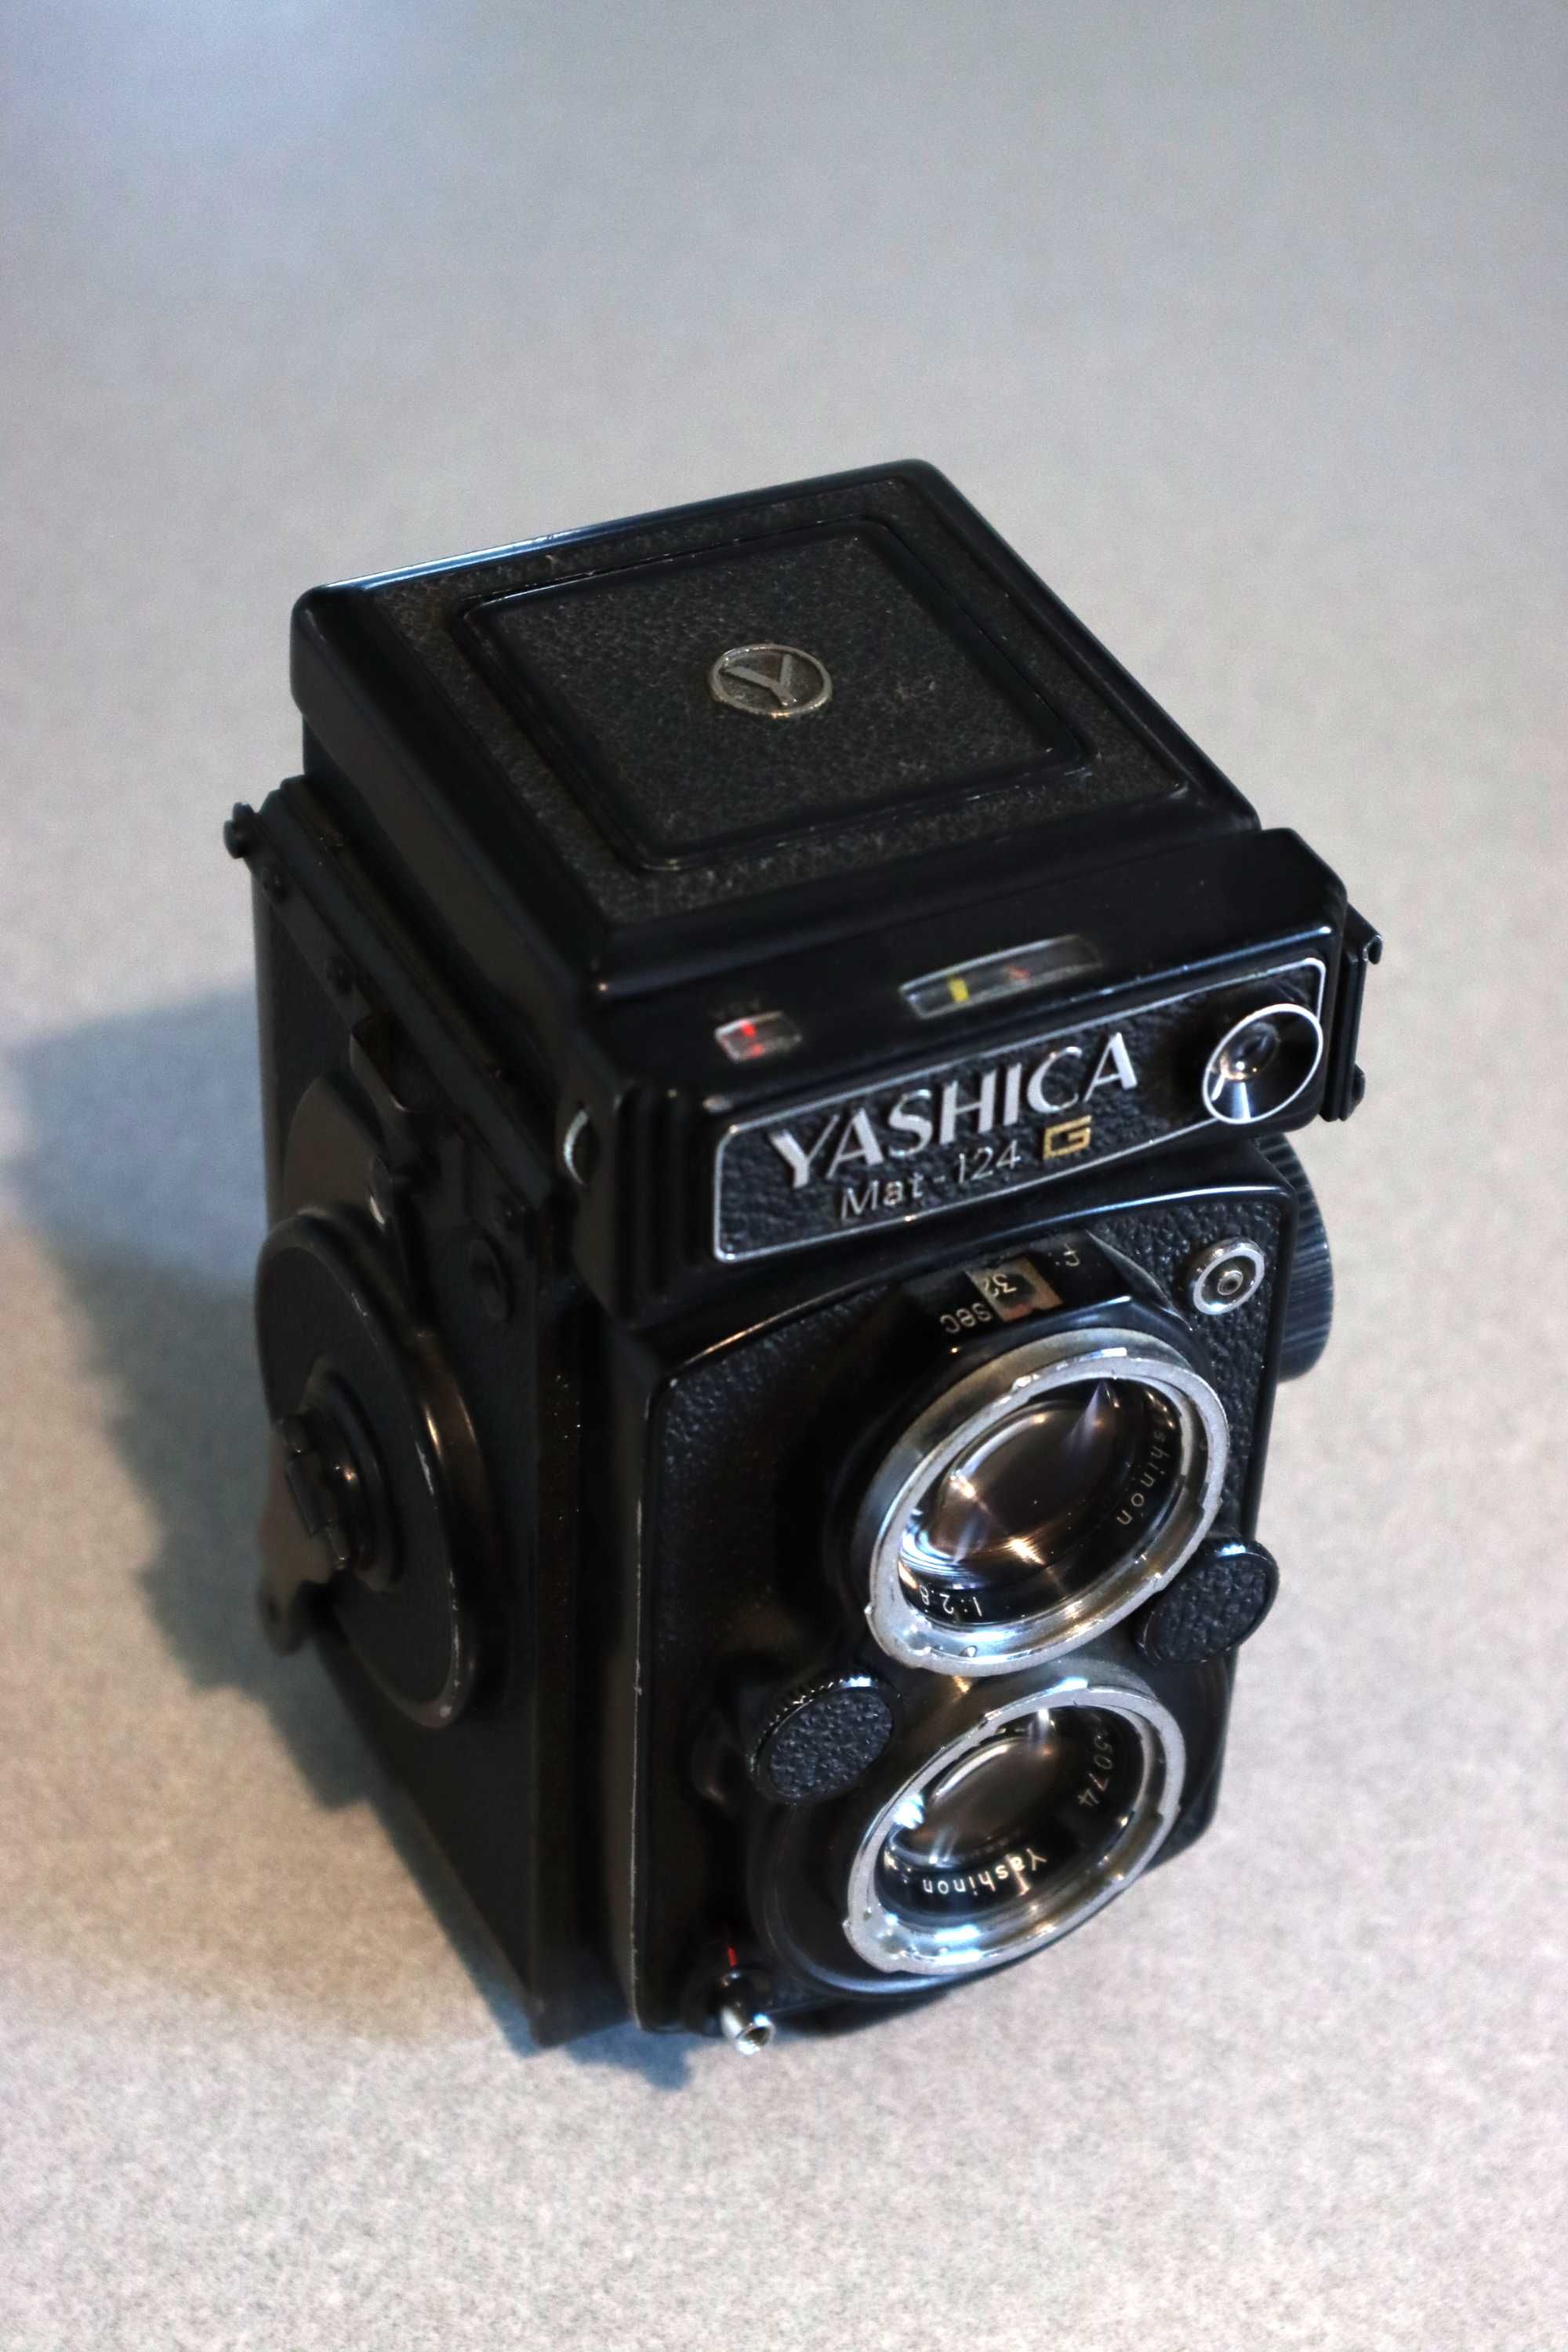 Yashica MAT 124 G